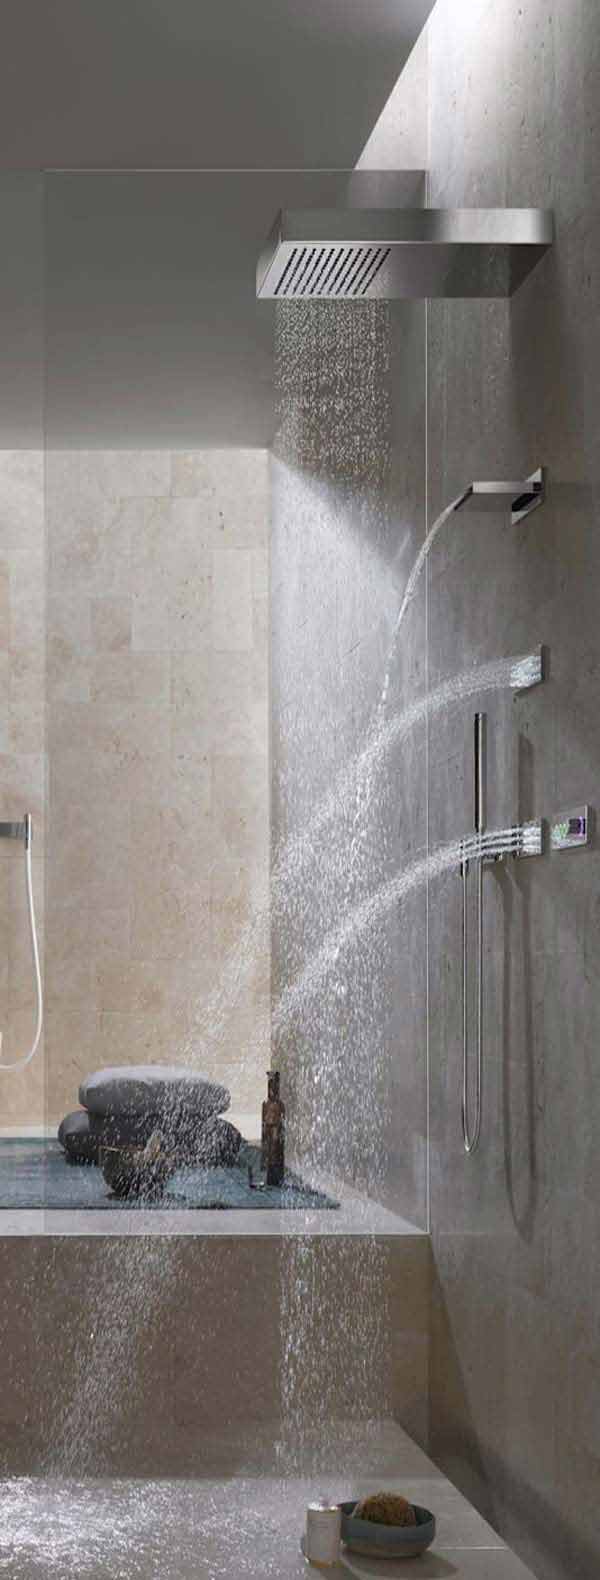 27 Must See Rain Shower Ideas for Your Dream Bathroom - Amazing DIY